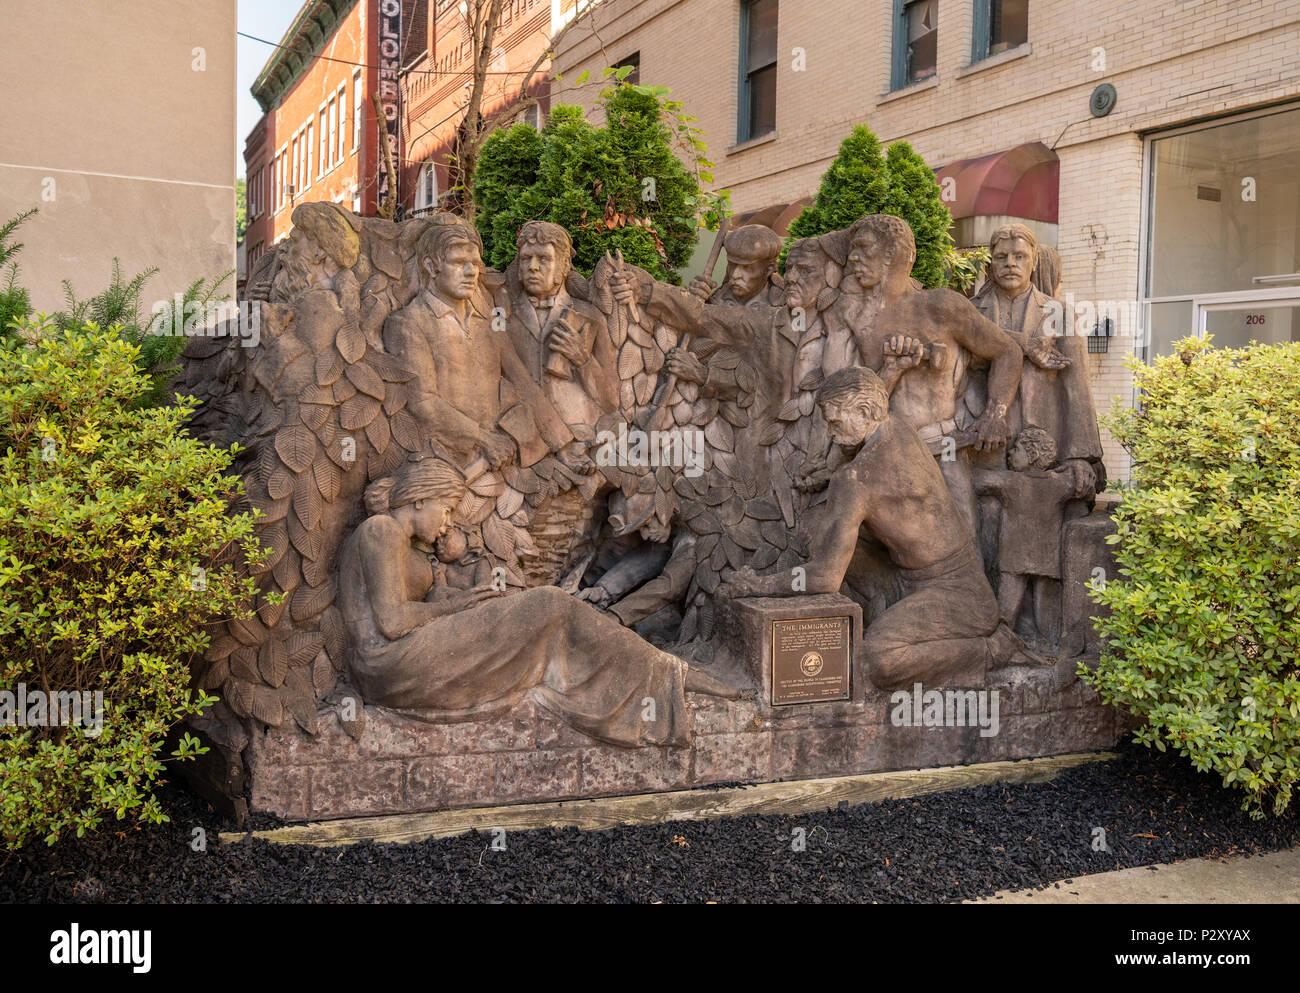 The Immigrants statue in Clarksburg West Virginia Stock Photo